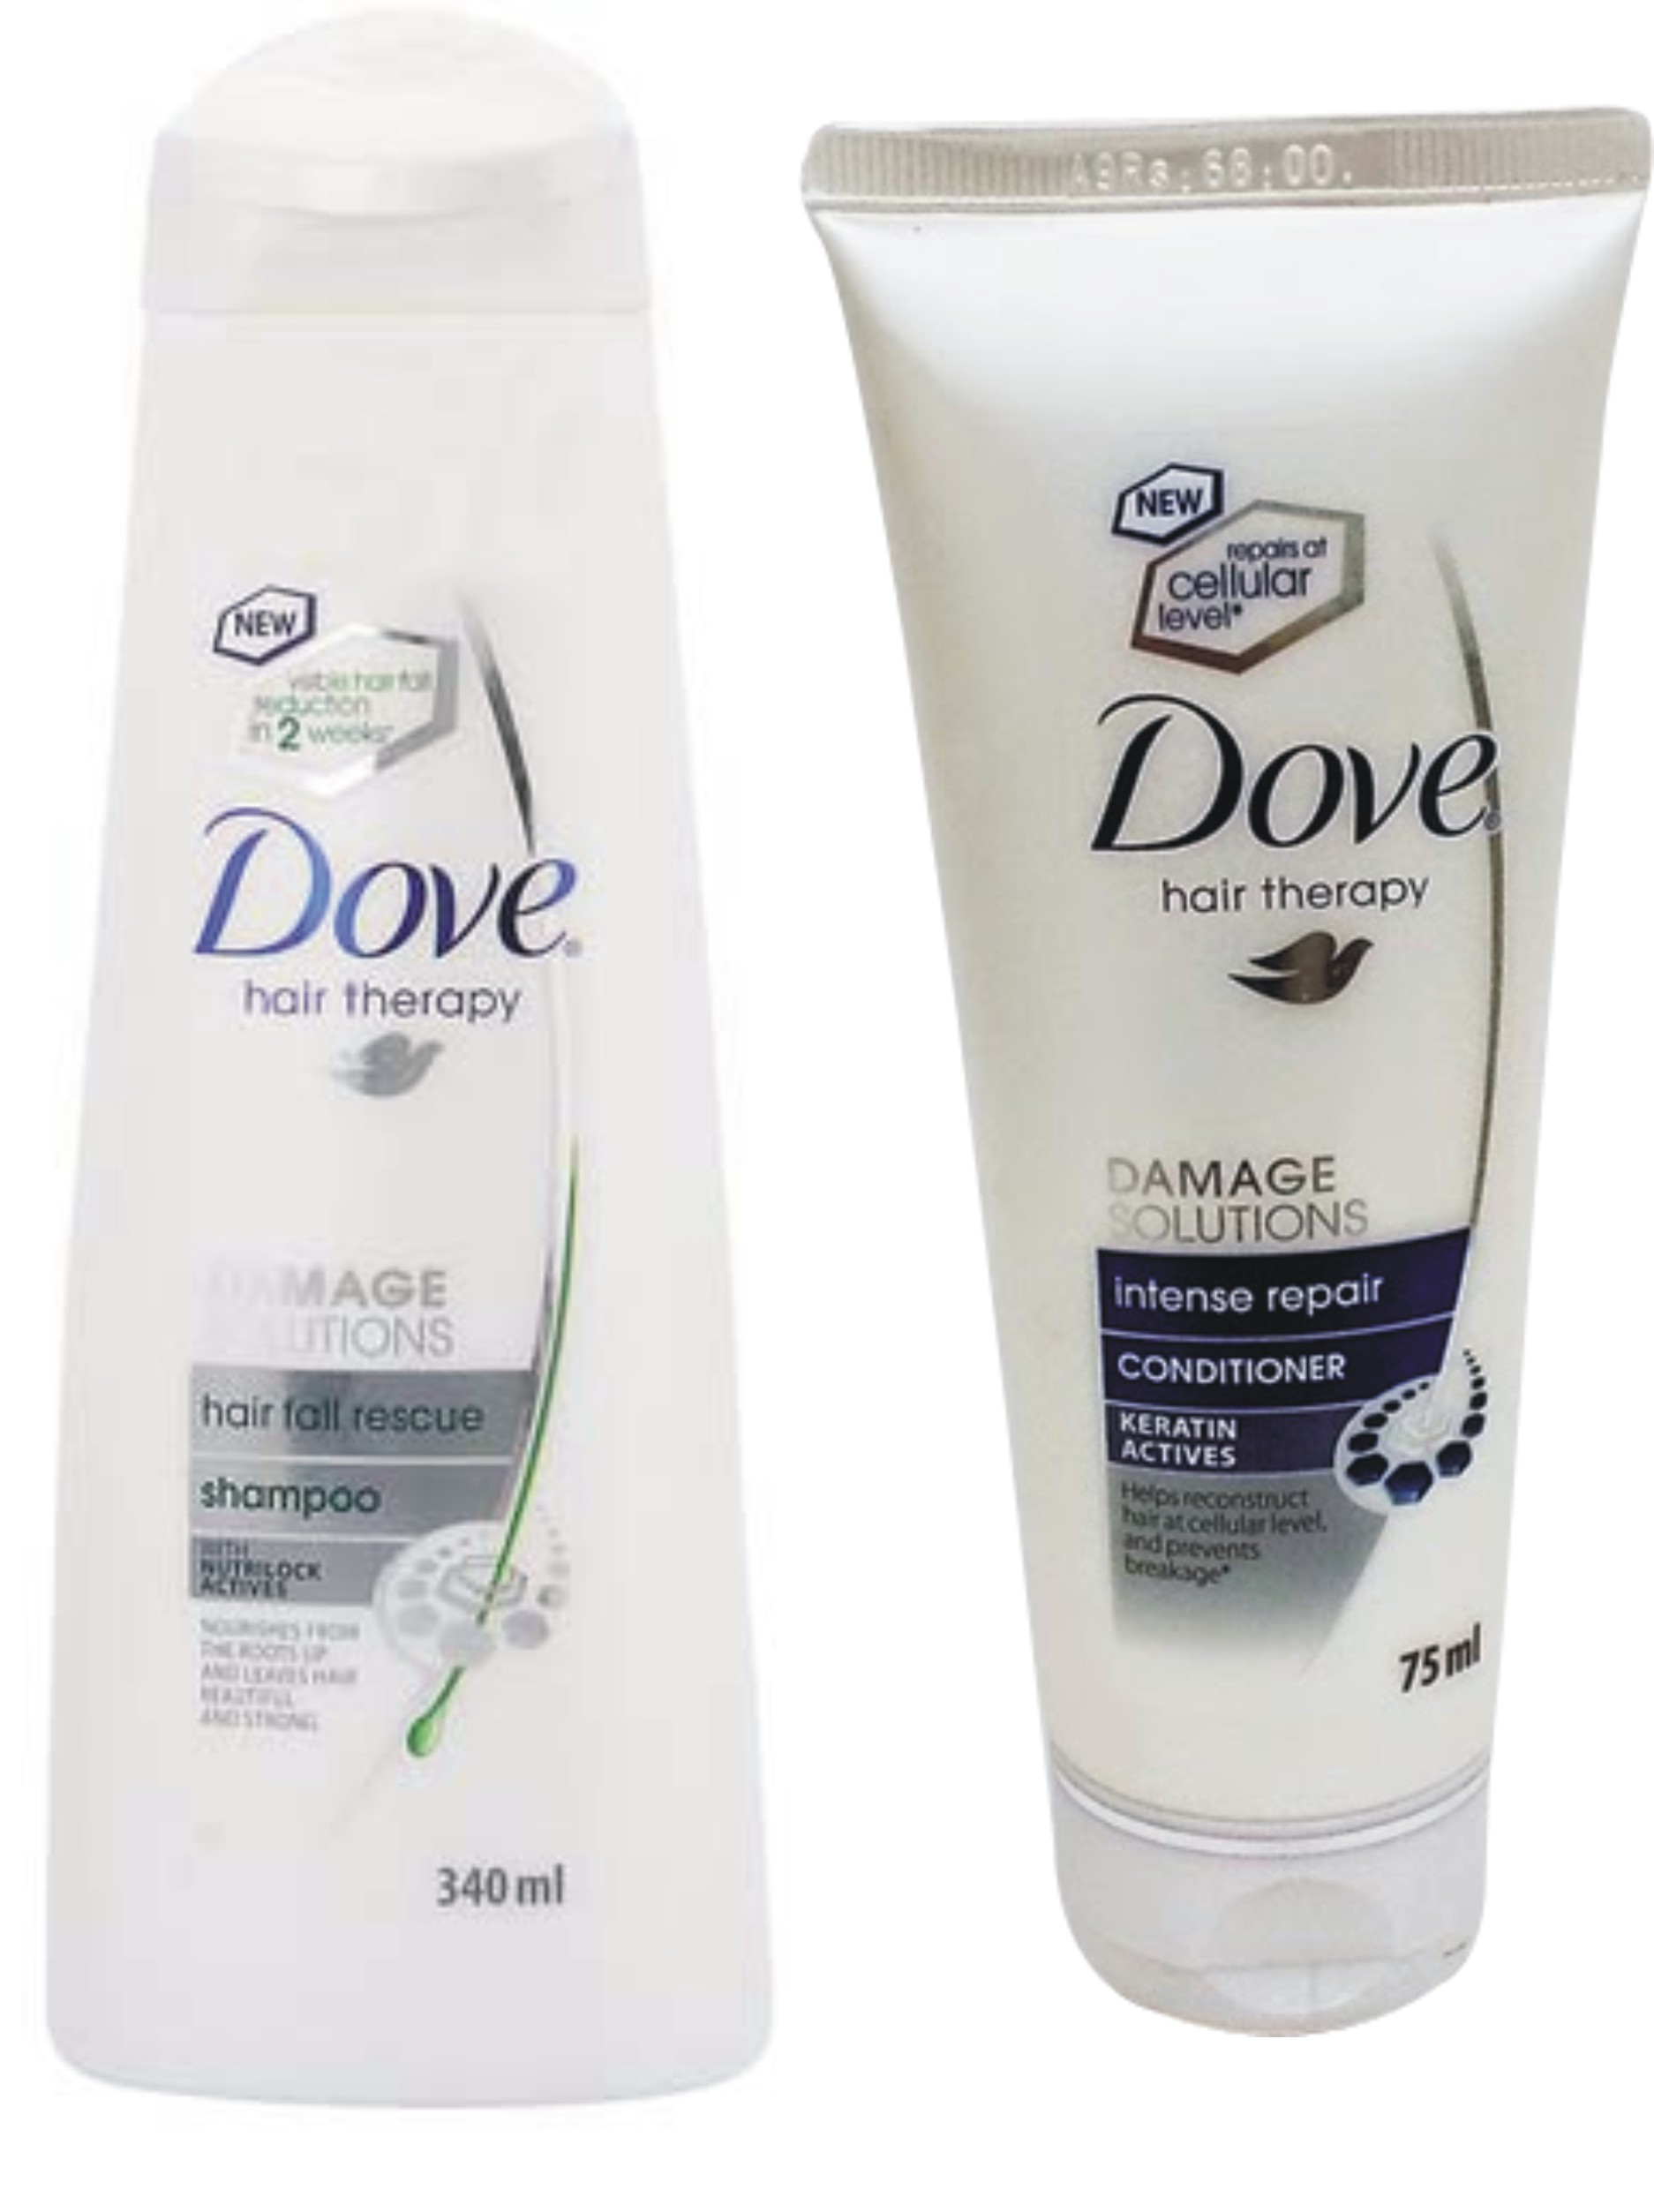 Dovecombo Shampoo Bottle Clipart